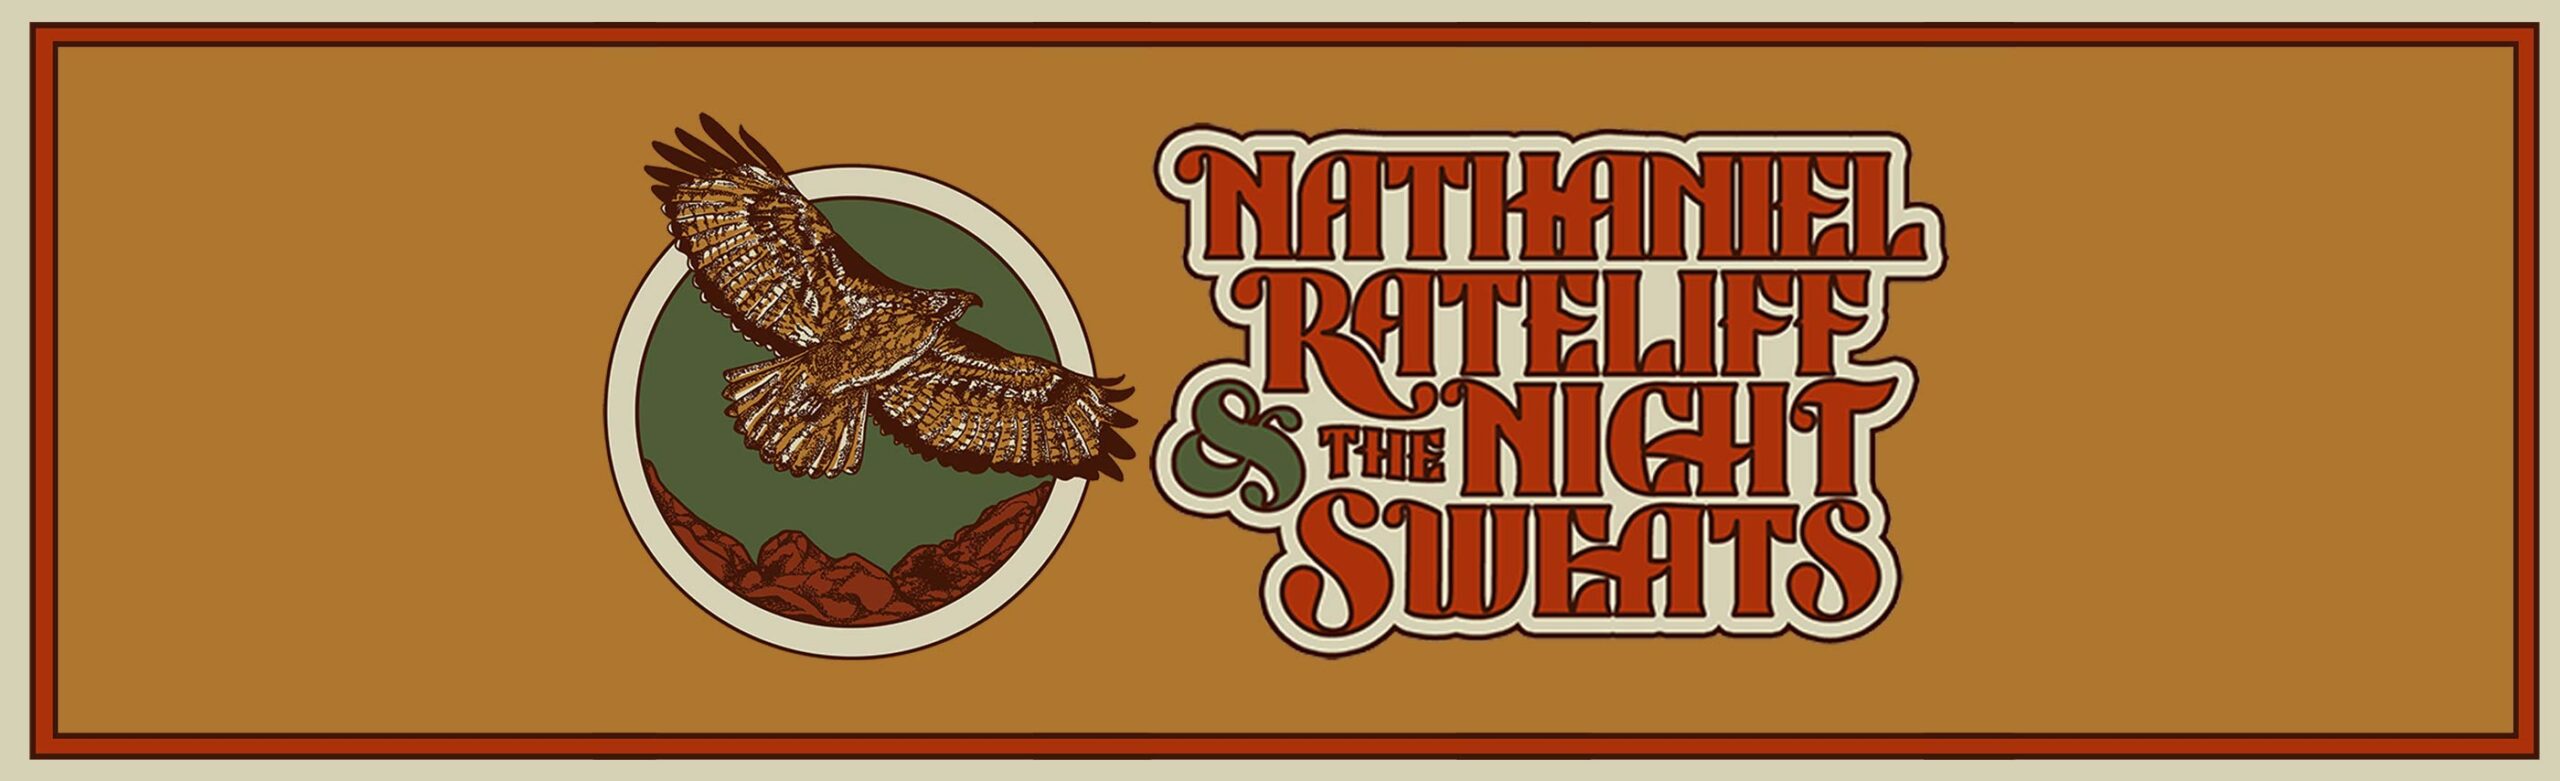 Nathaniel Rateliff & The Night Sweats (Night 2)